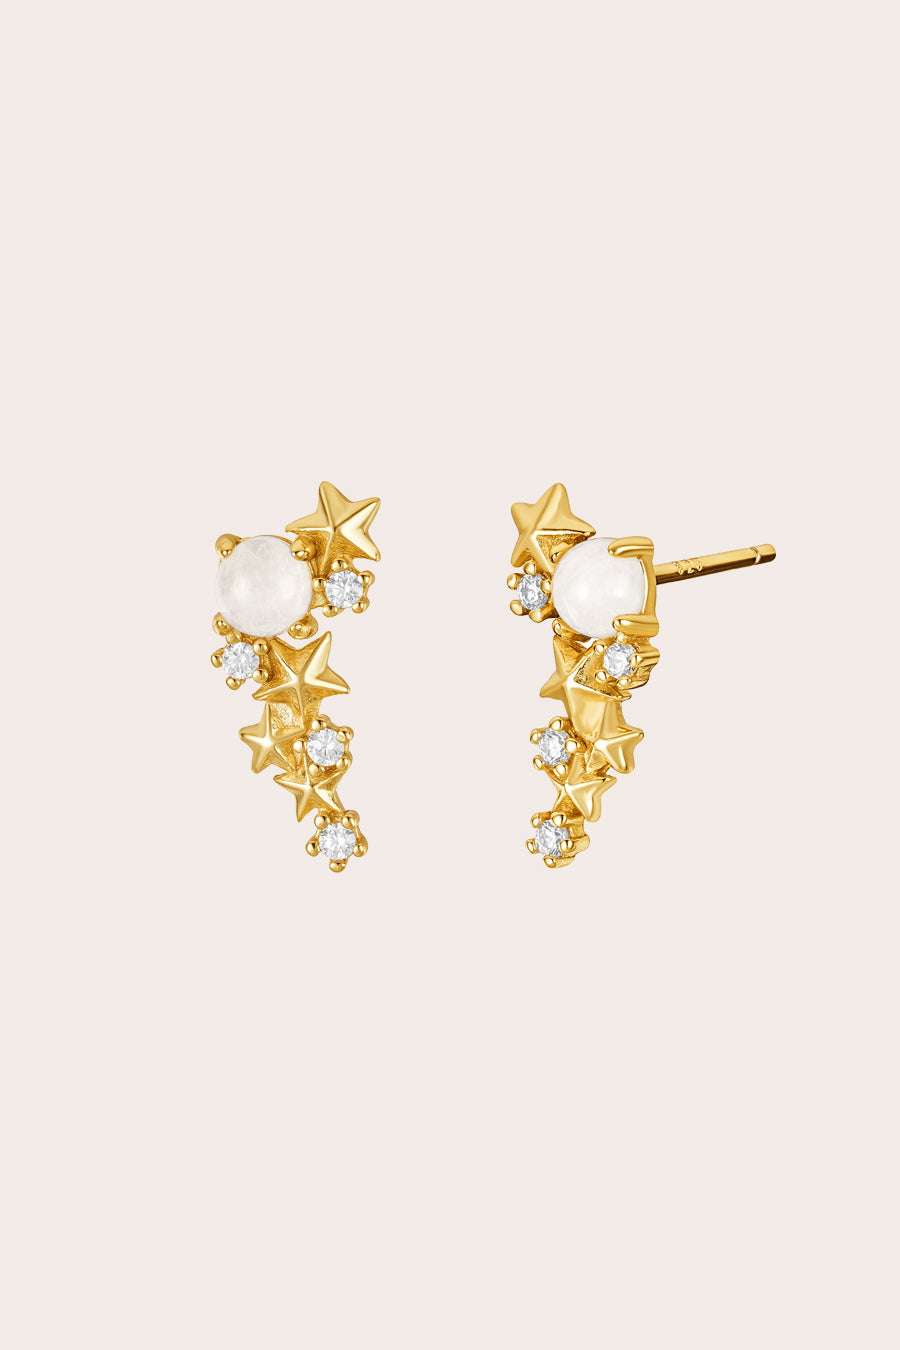 Gold Matariki Earrings jewellery on cream background